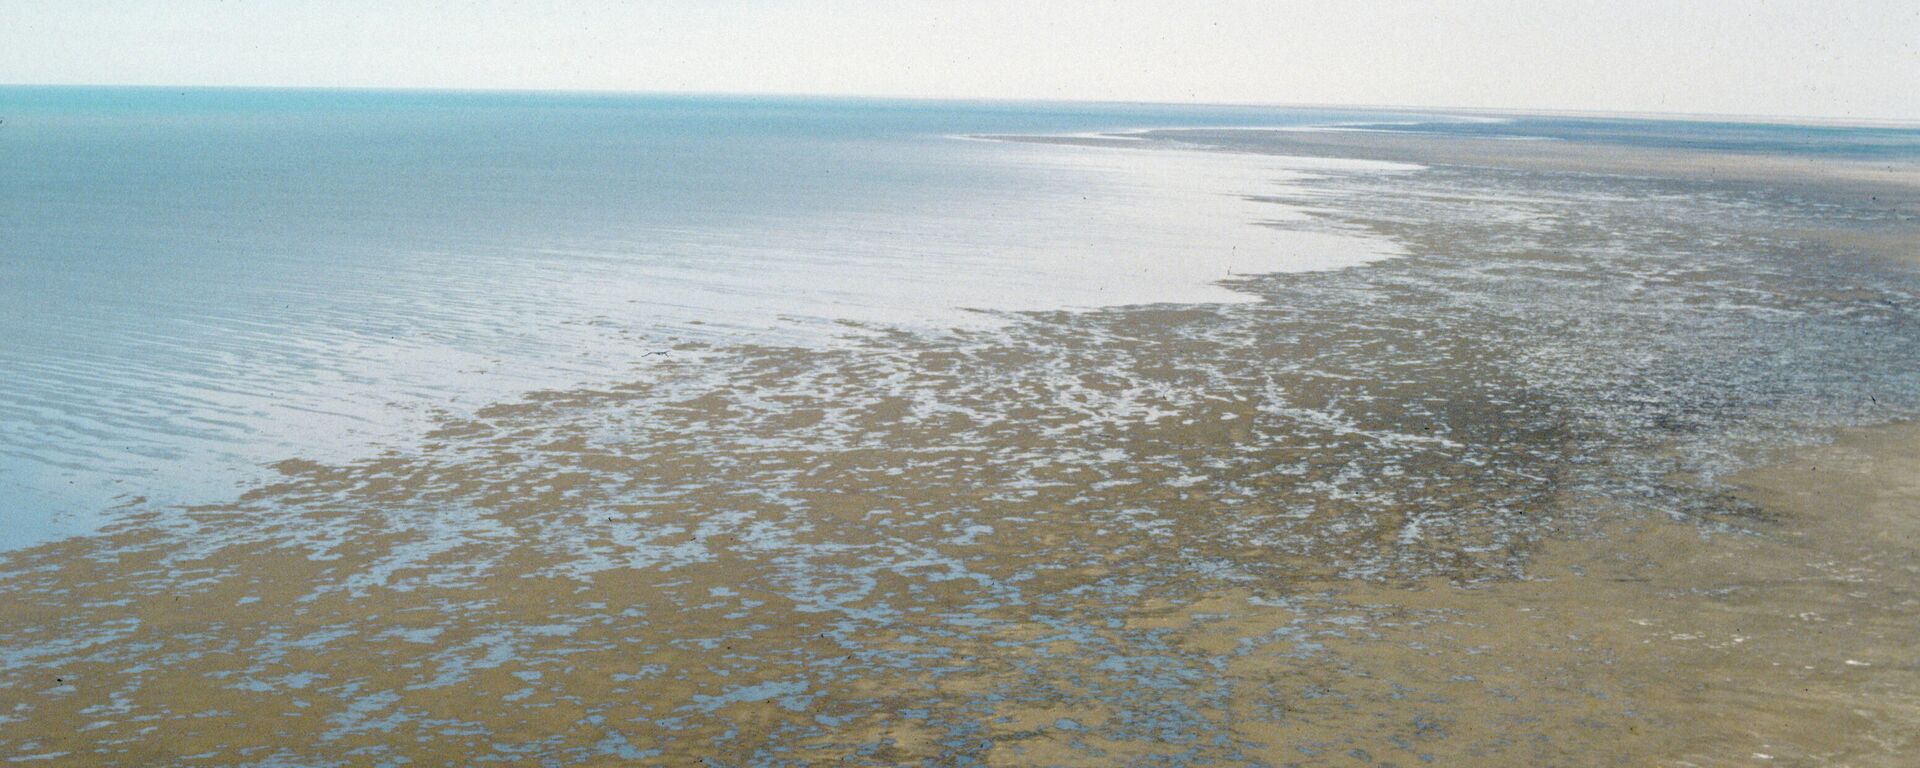 Берег пересыхающего Аральского моря - Sputnik Latvija, 1920, 23.01.2022